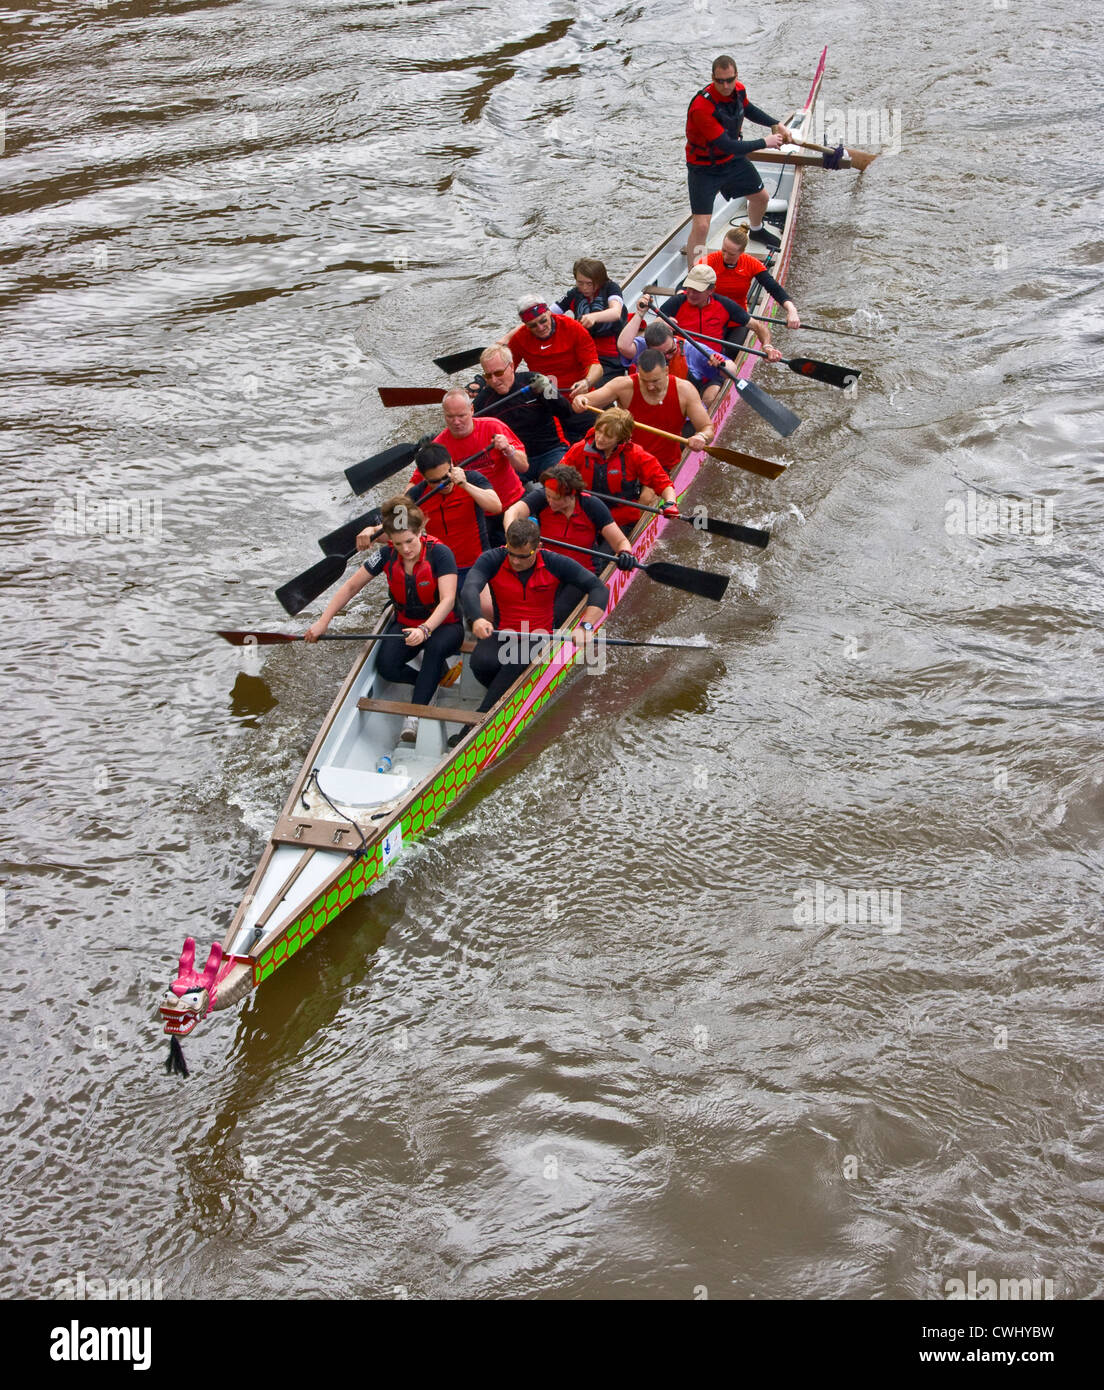 Dragon Boat team sessione di formazione pratica sul fiume Severn Worcester Worcestershire Inghilterra Europa Foto Stock